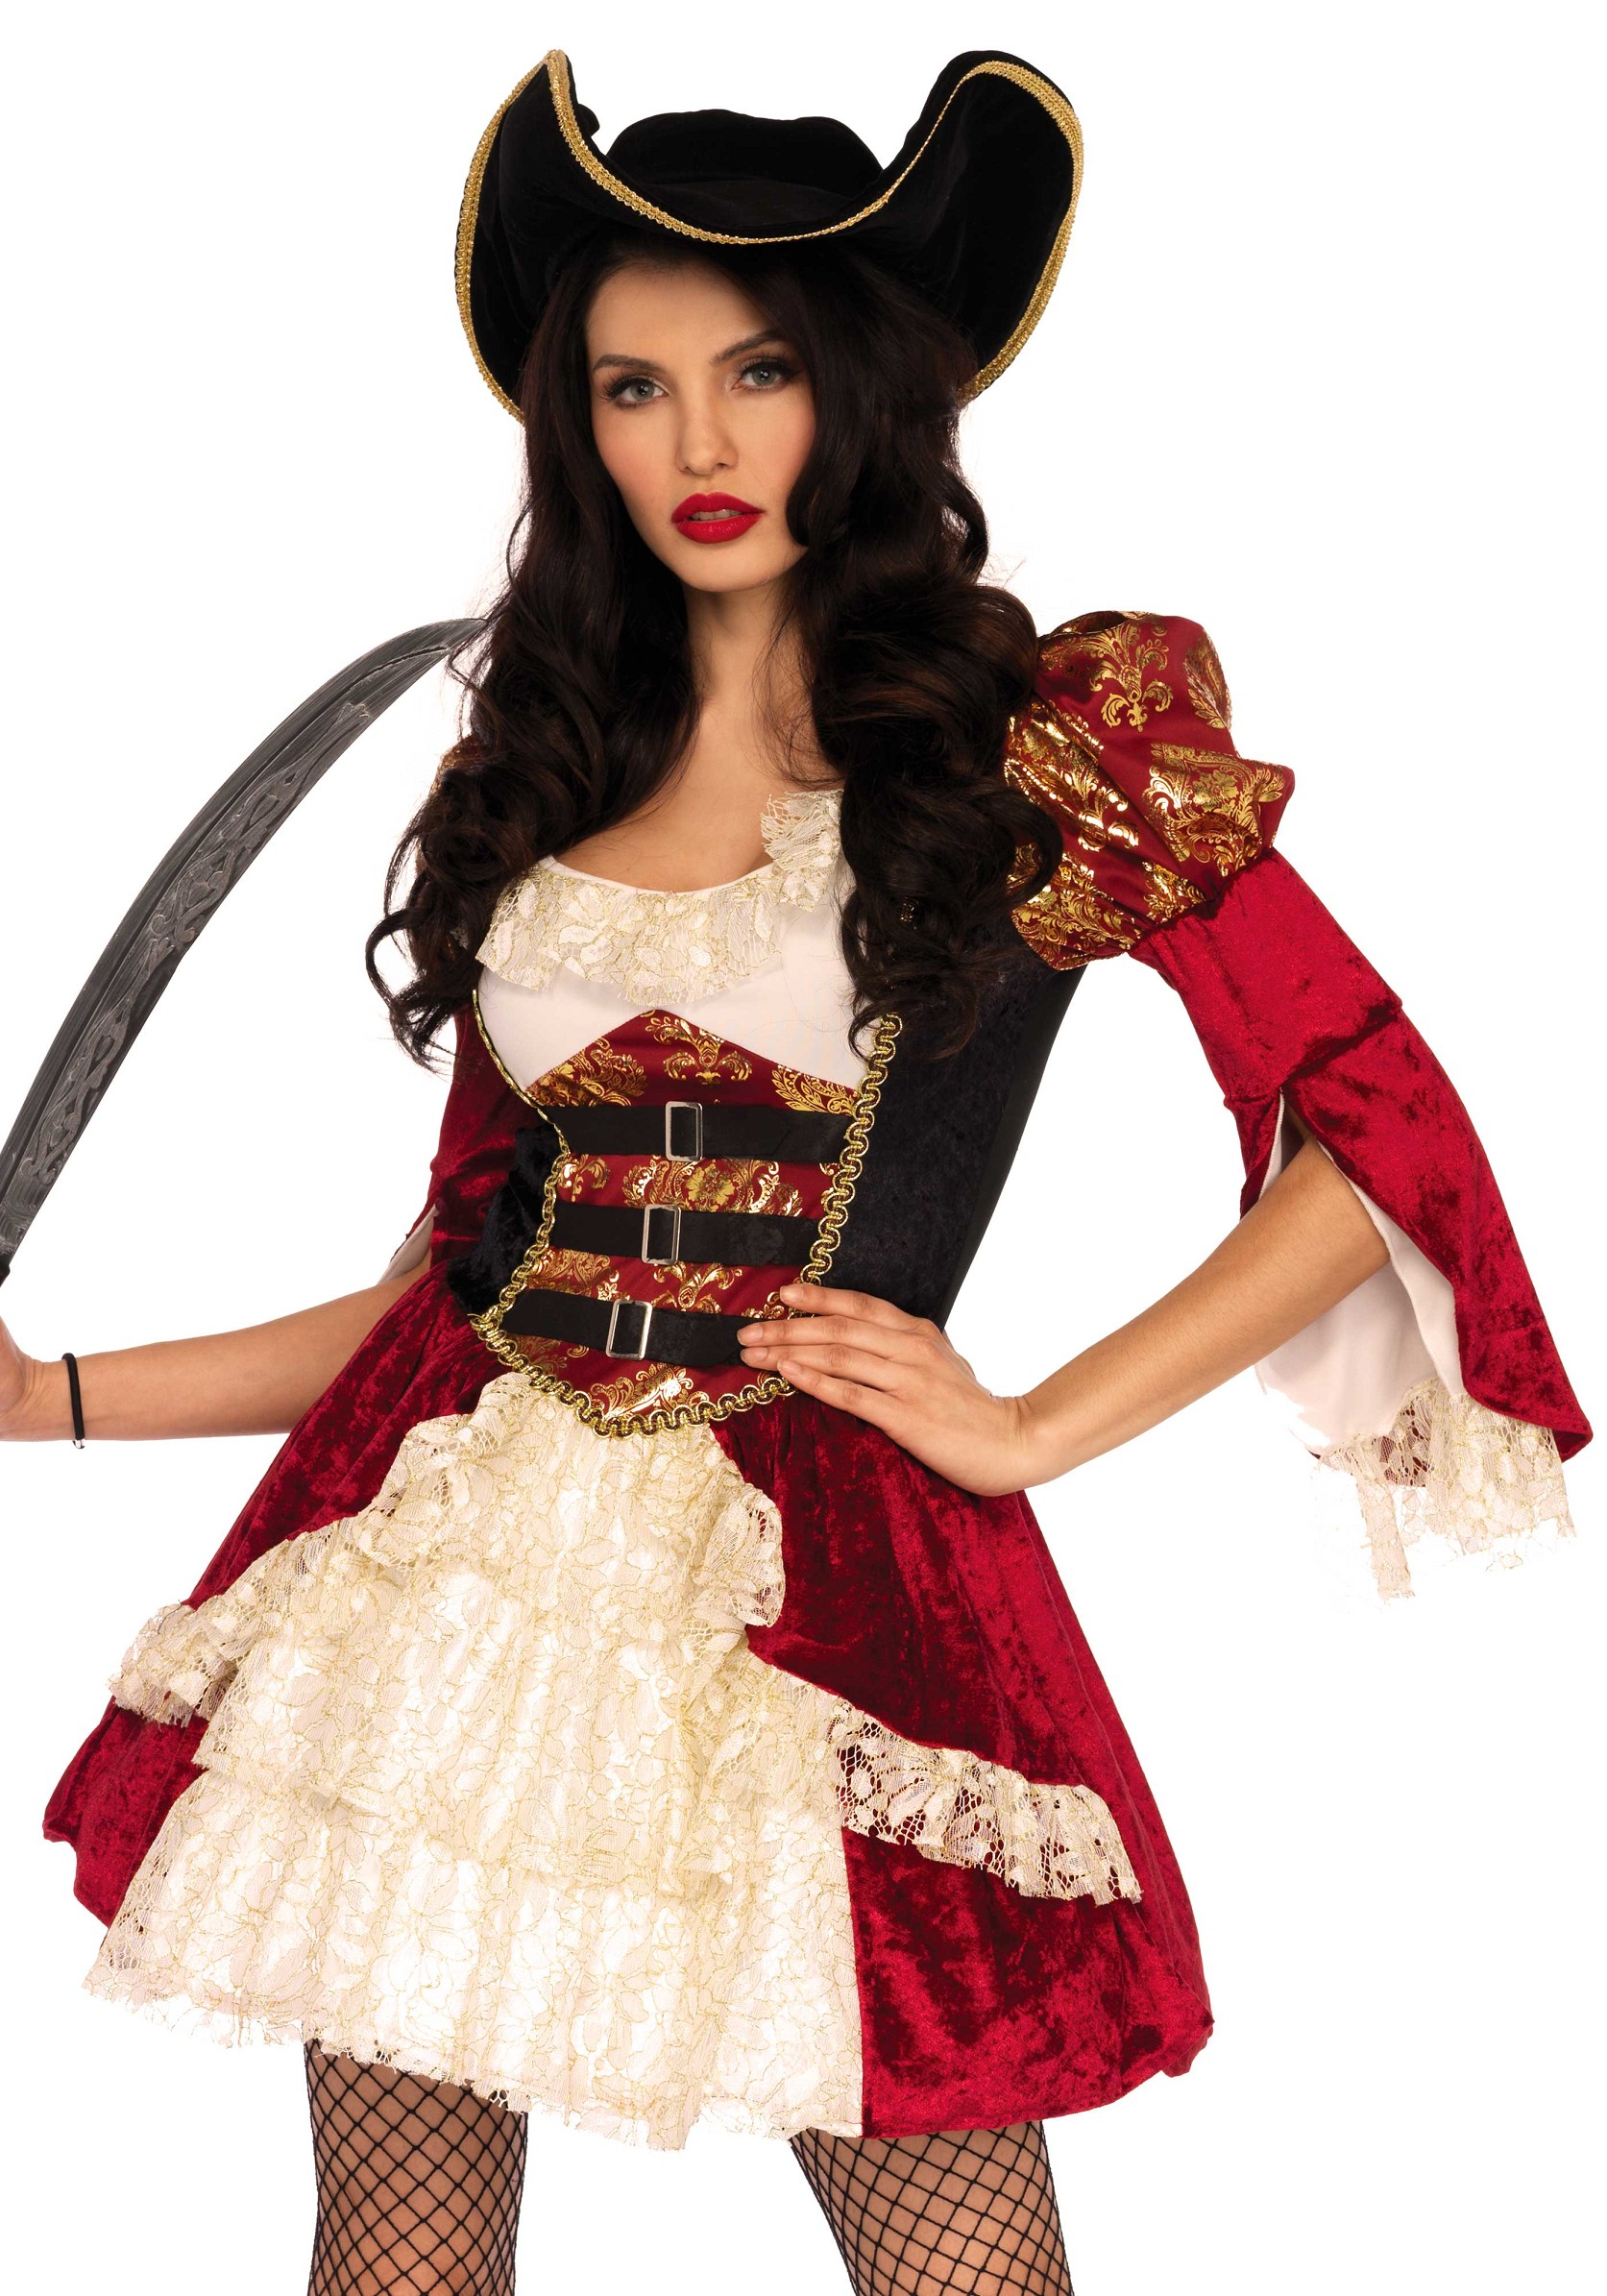 Spiksplinternieuw Sexy Piraten jurk bestaande uit warm rode fluwelen jurk met FM-58